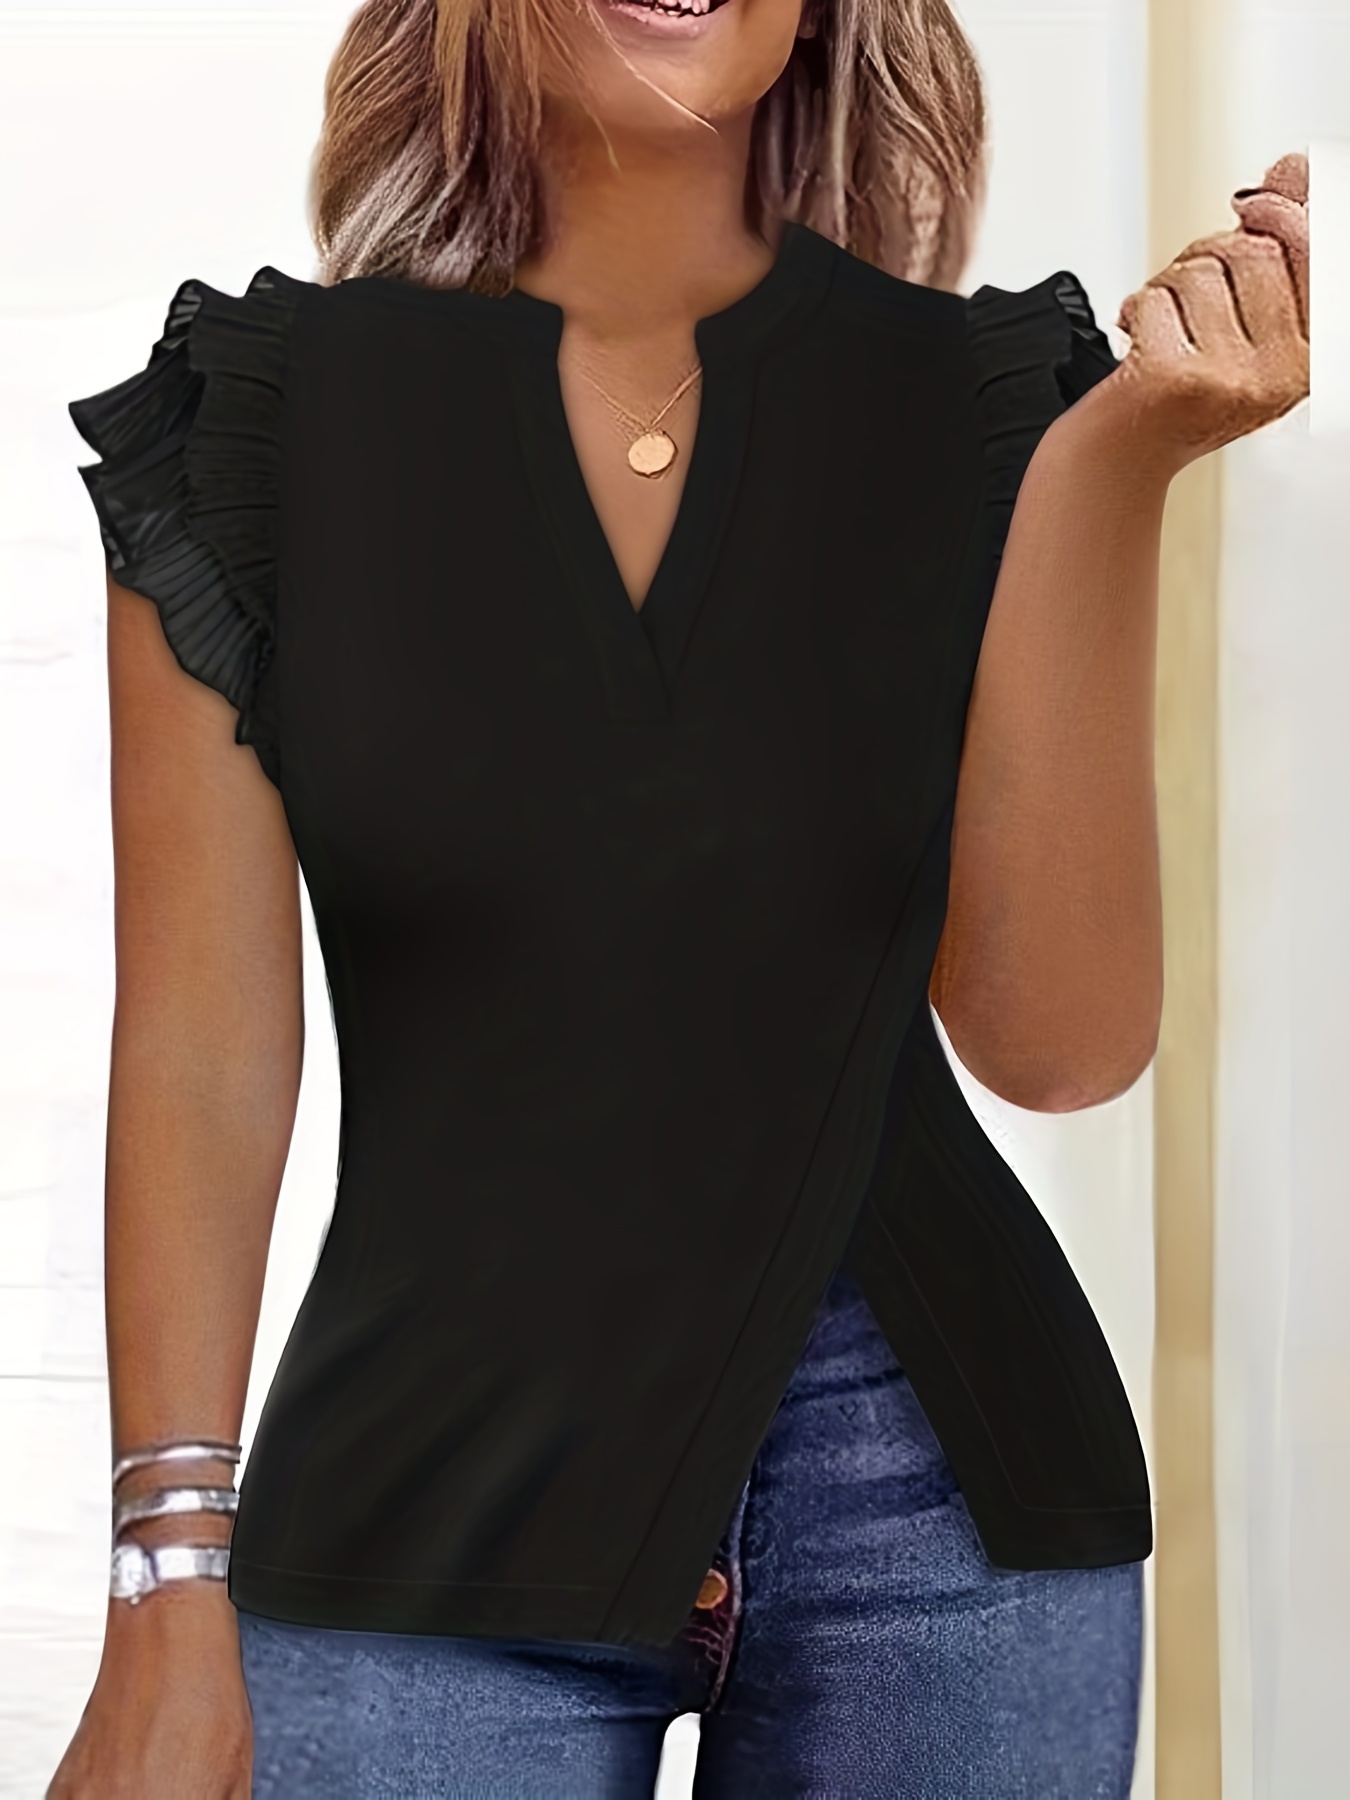 XFLWAM Womens Summer Tops V Neck Puff Short Sleeve Shirts Solid